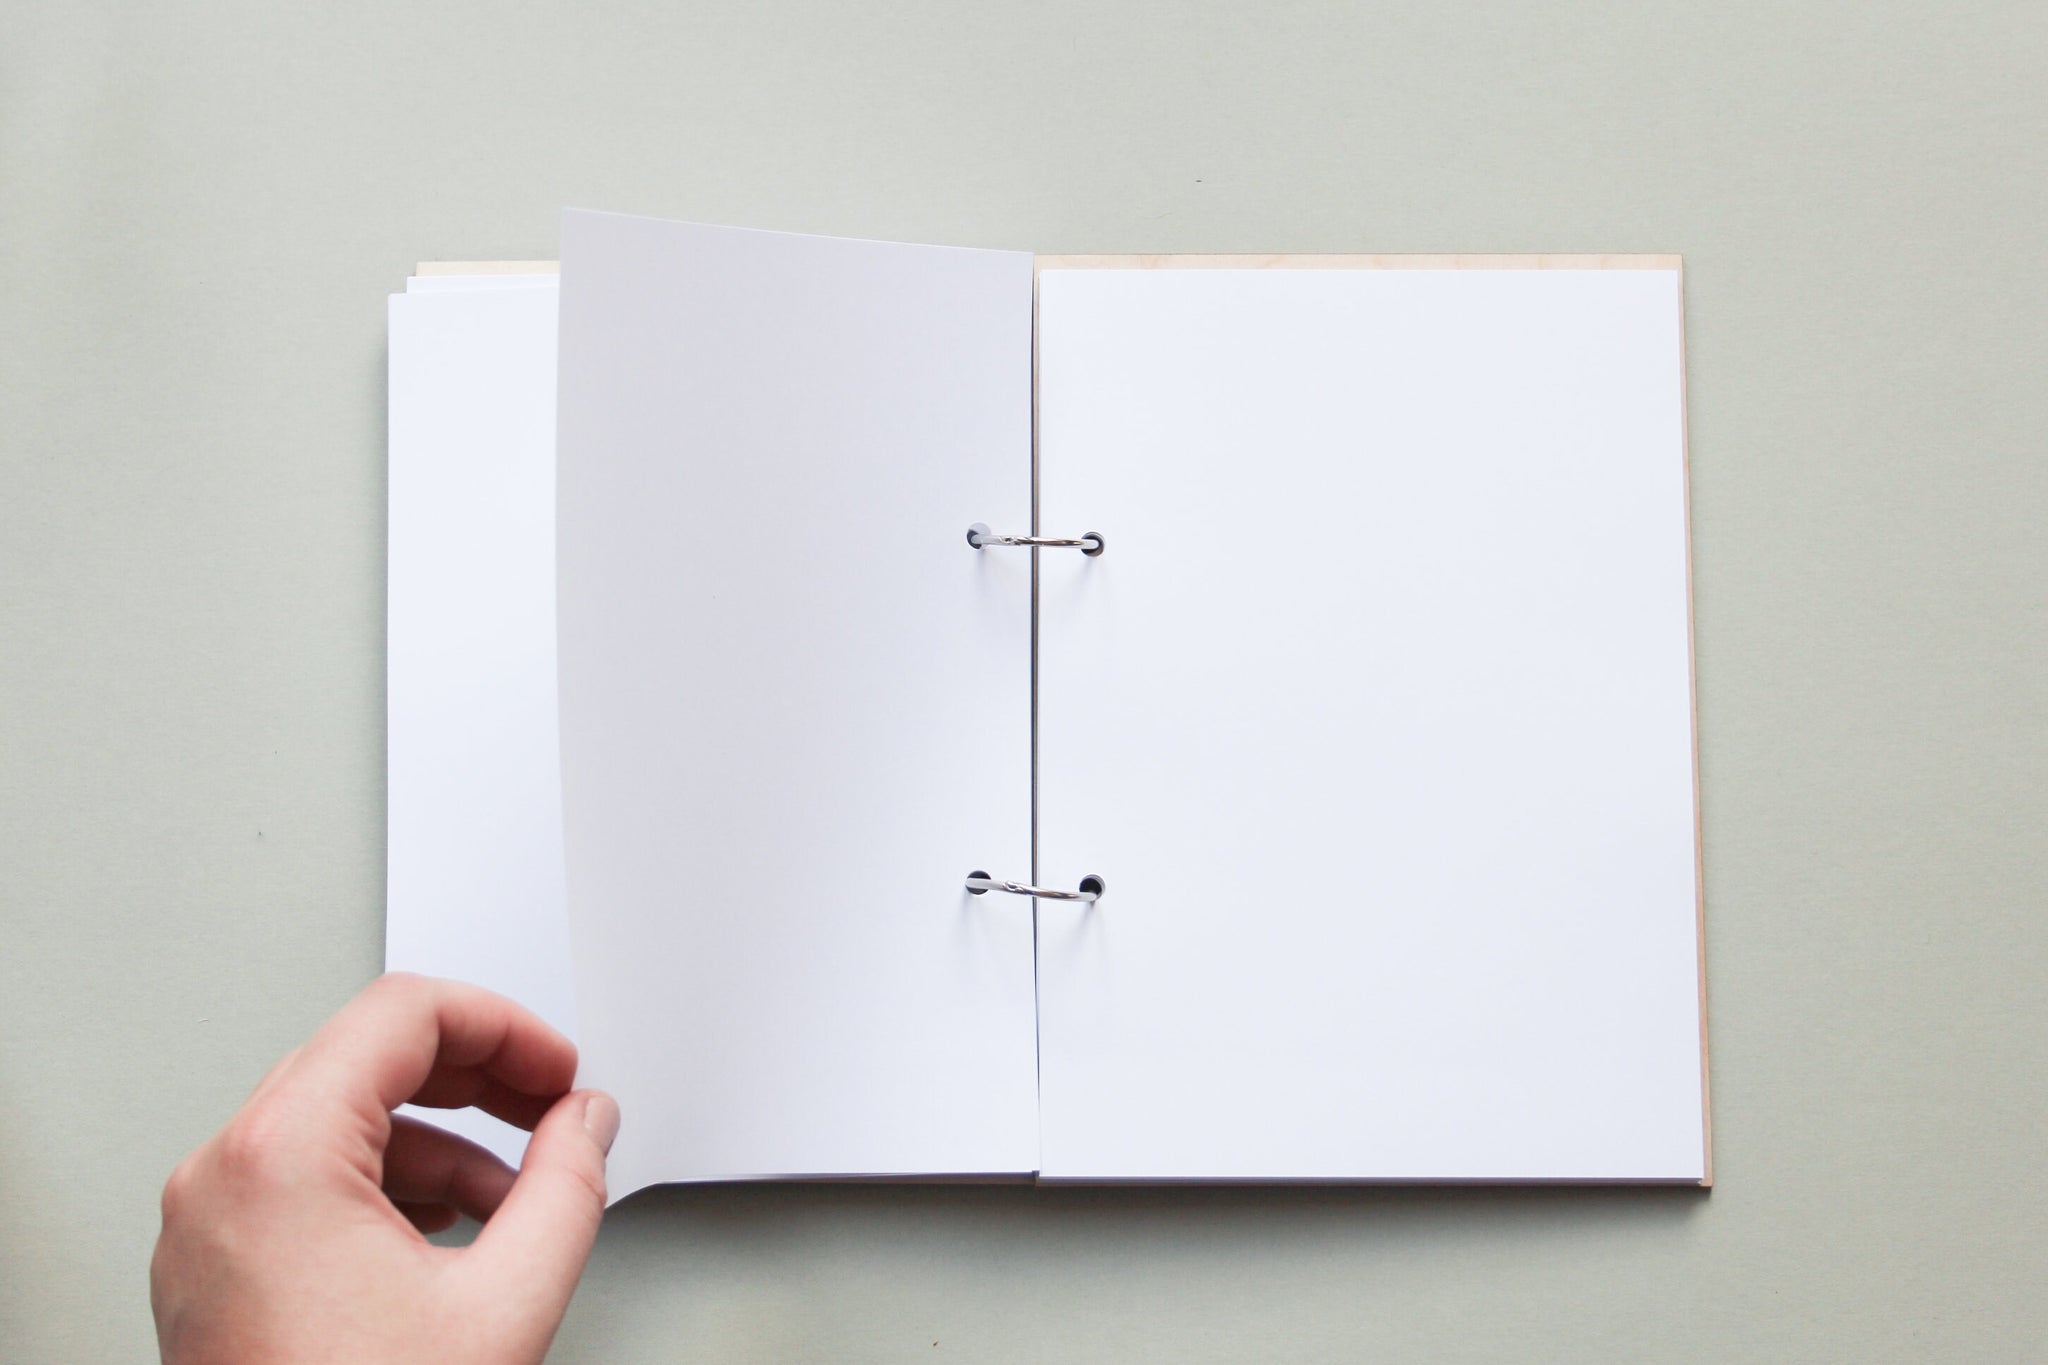 Custom Wooden Birch Photo Album Guest Book, Modern Wedding Guestbook With Simple Minimalistic Design